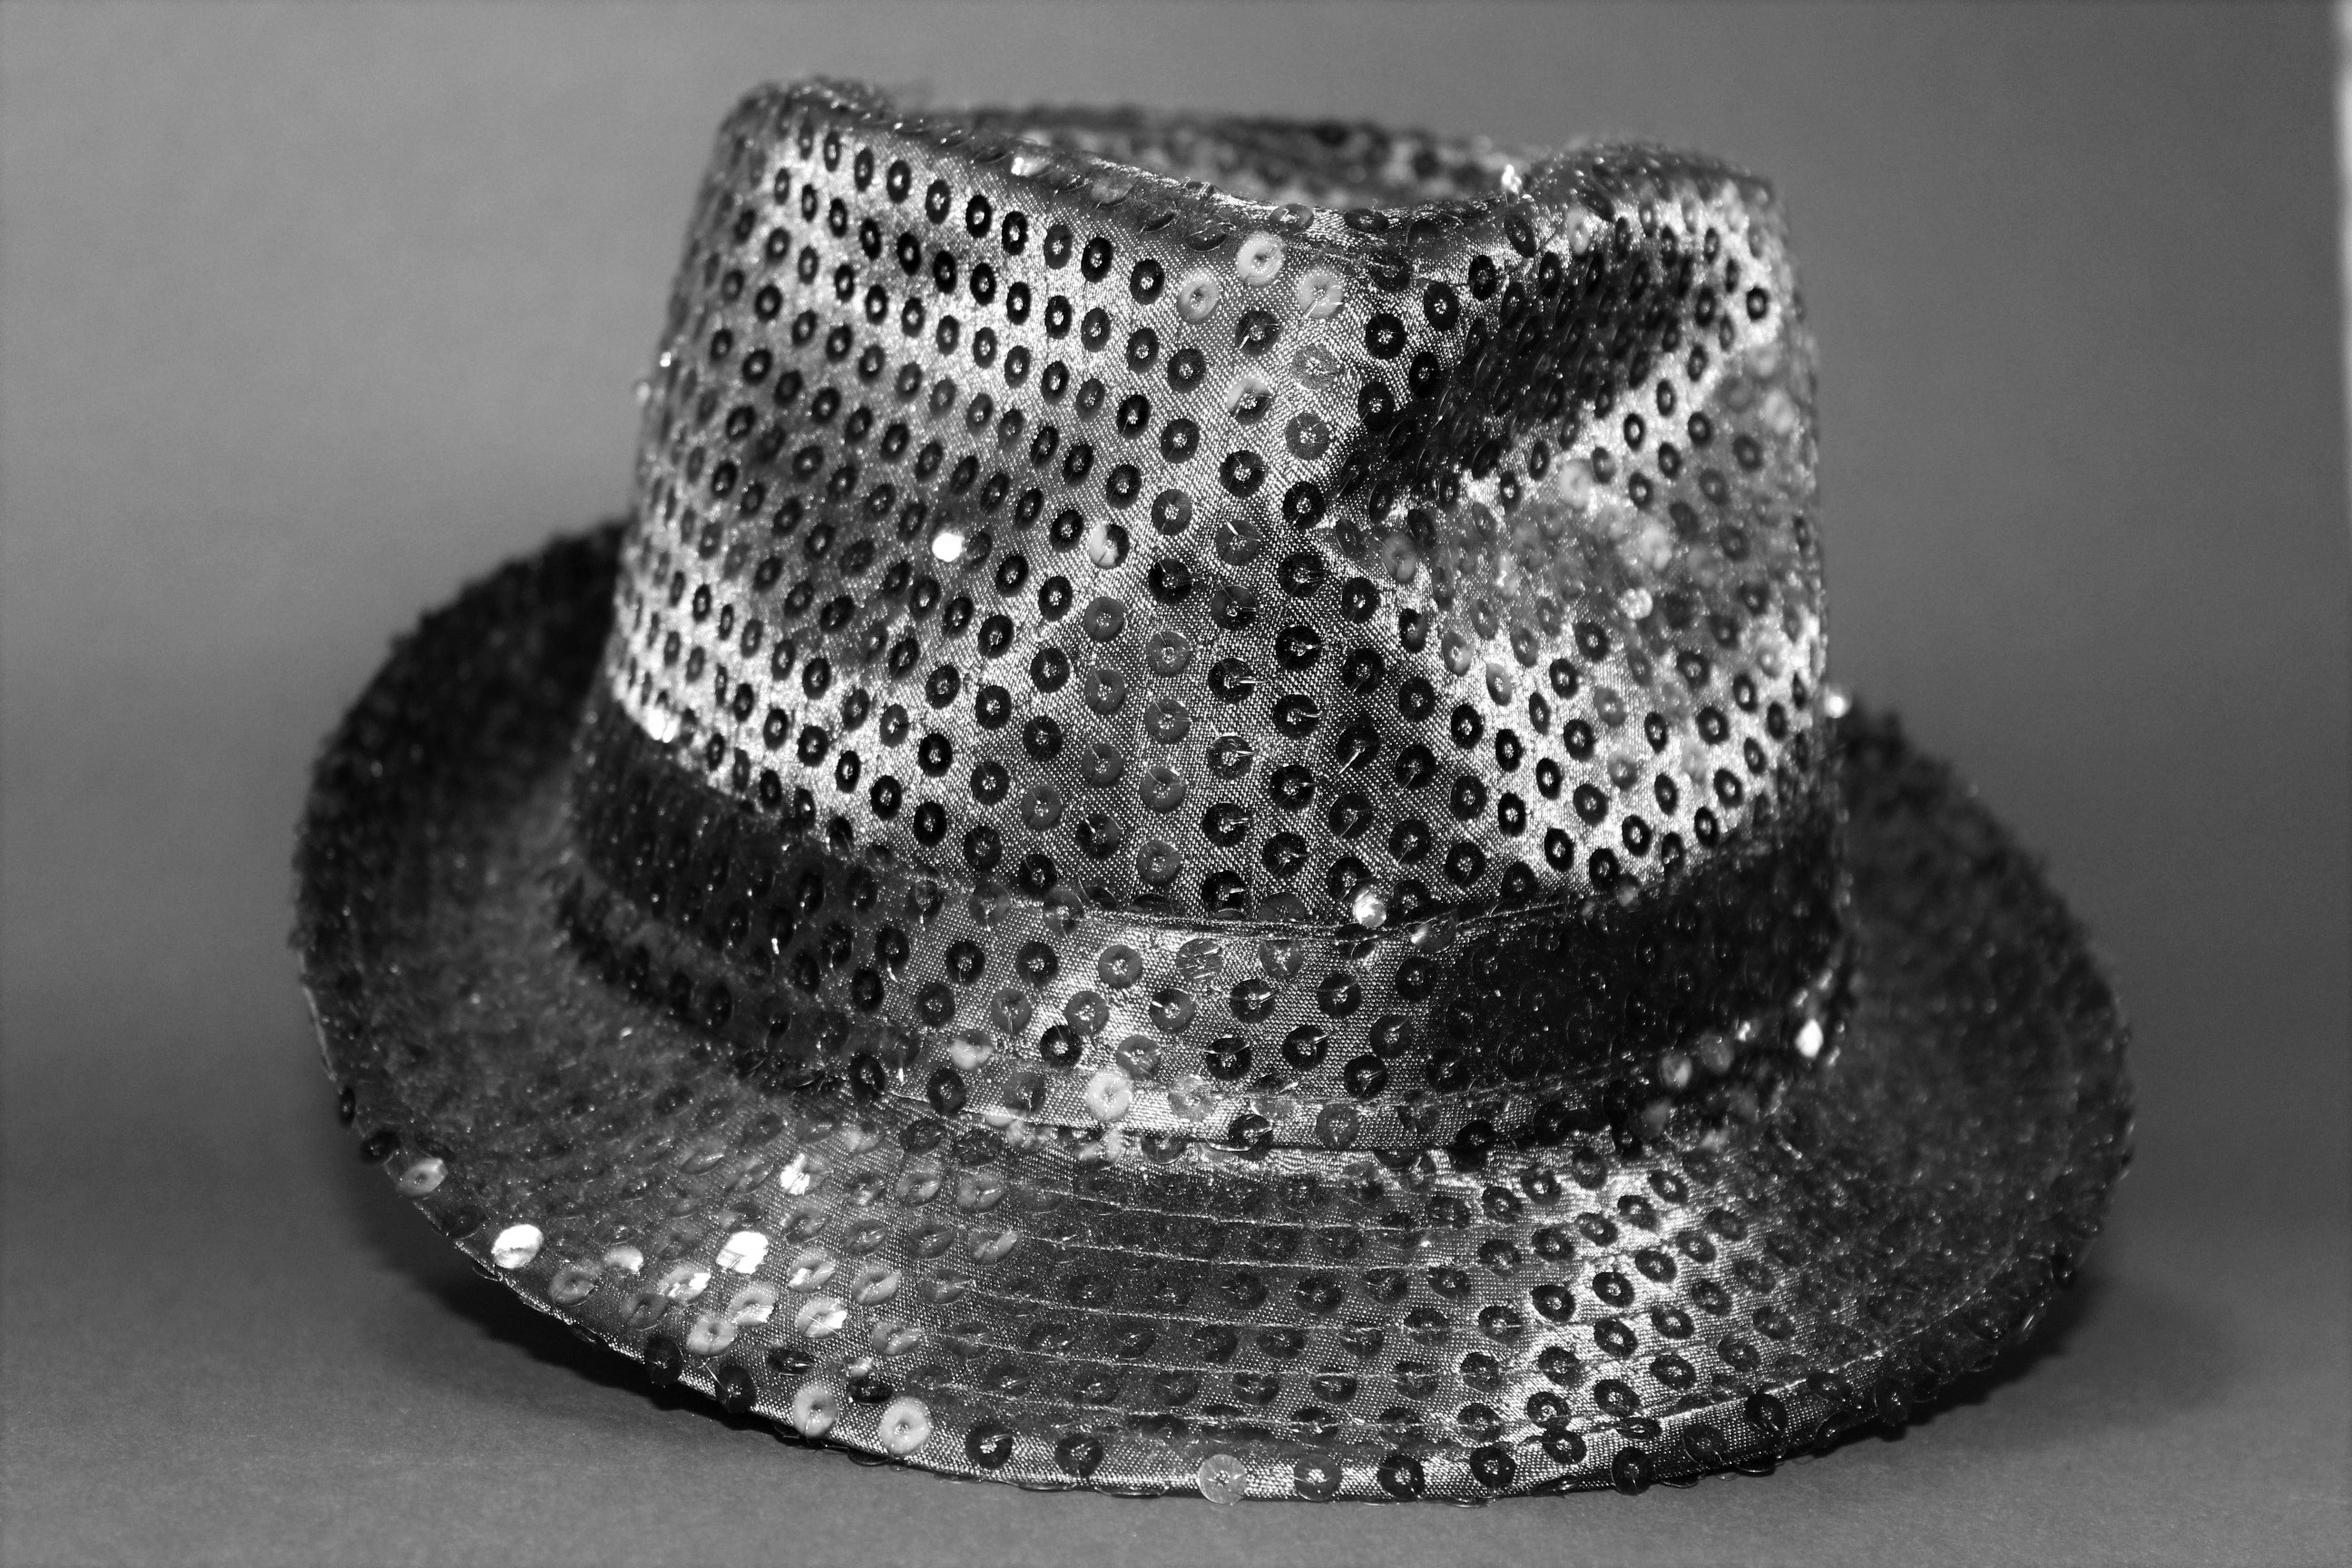 gray hat